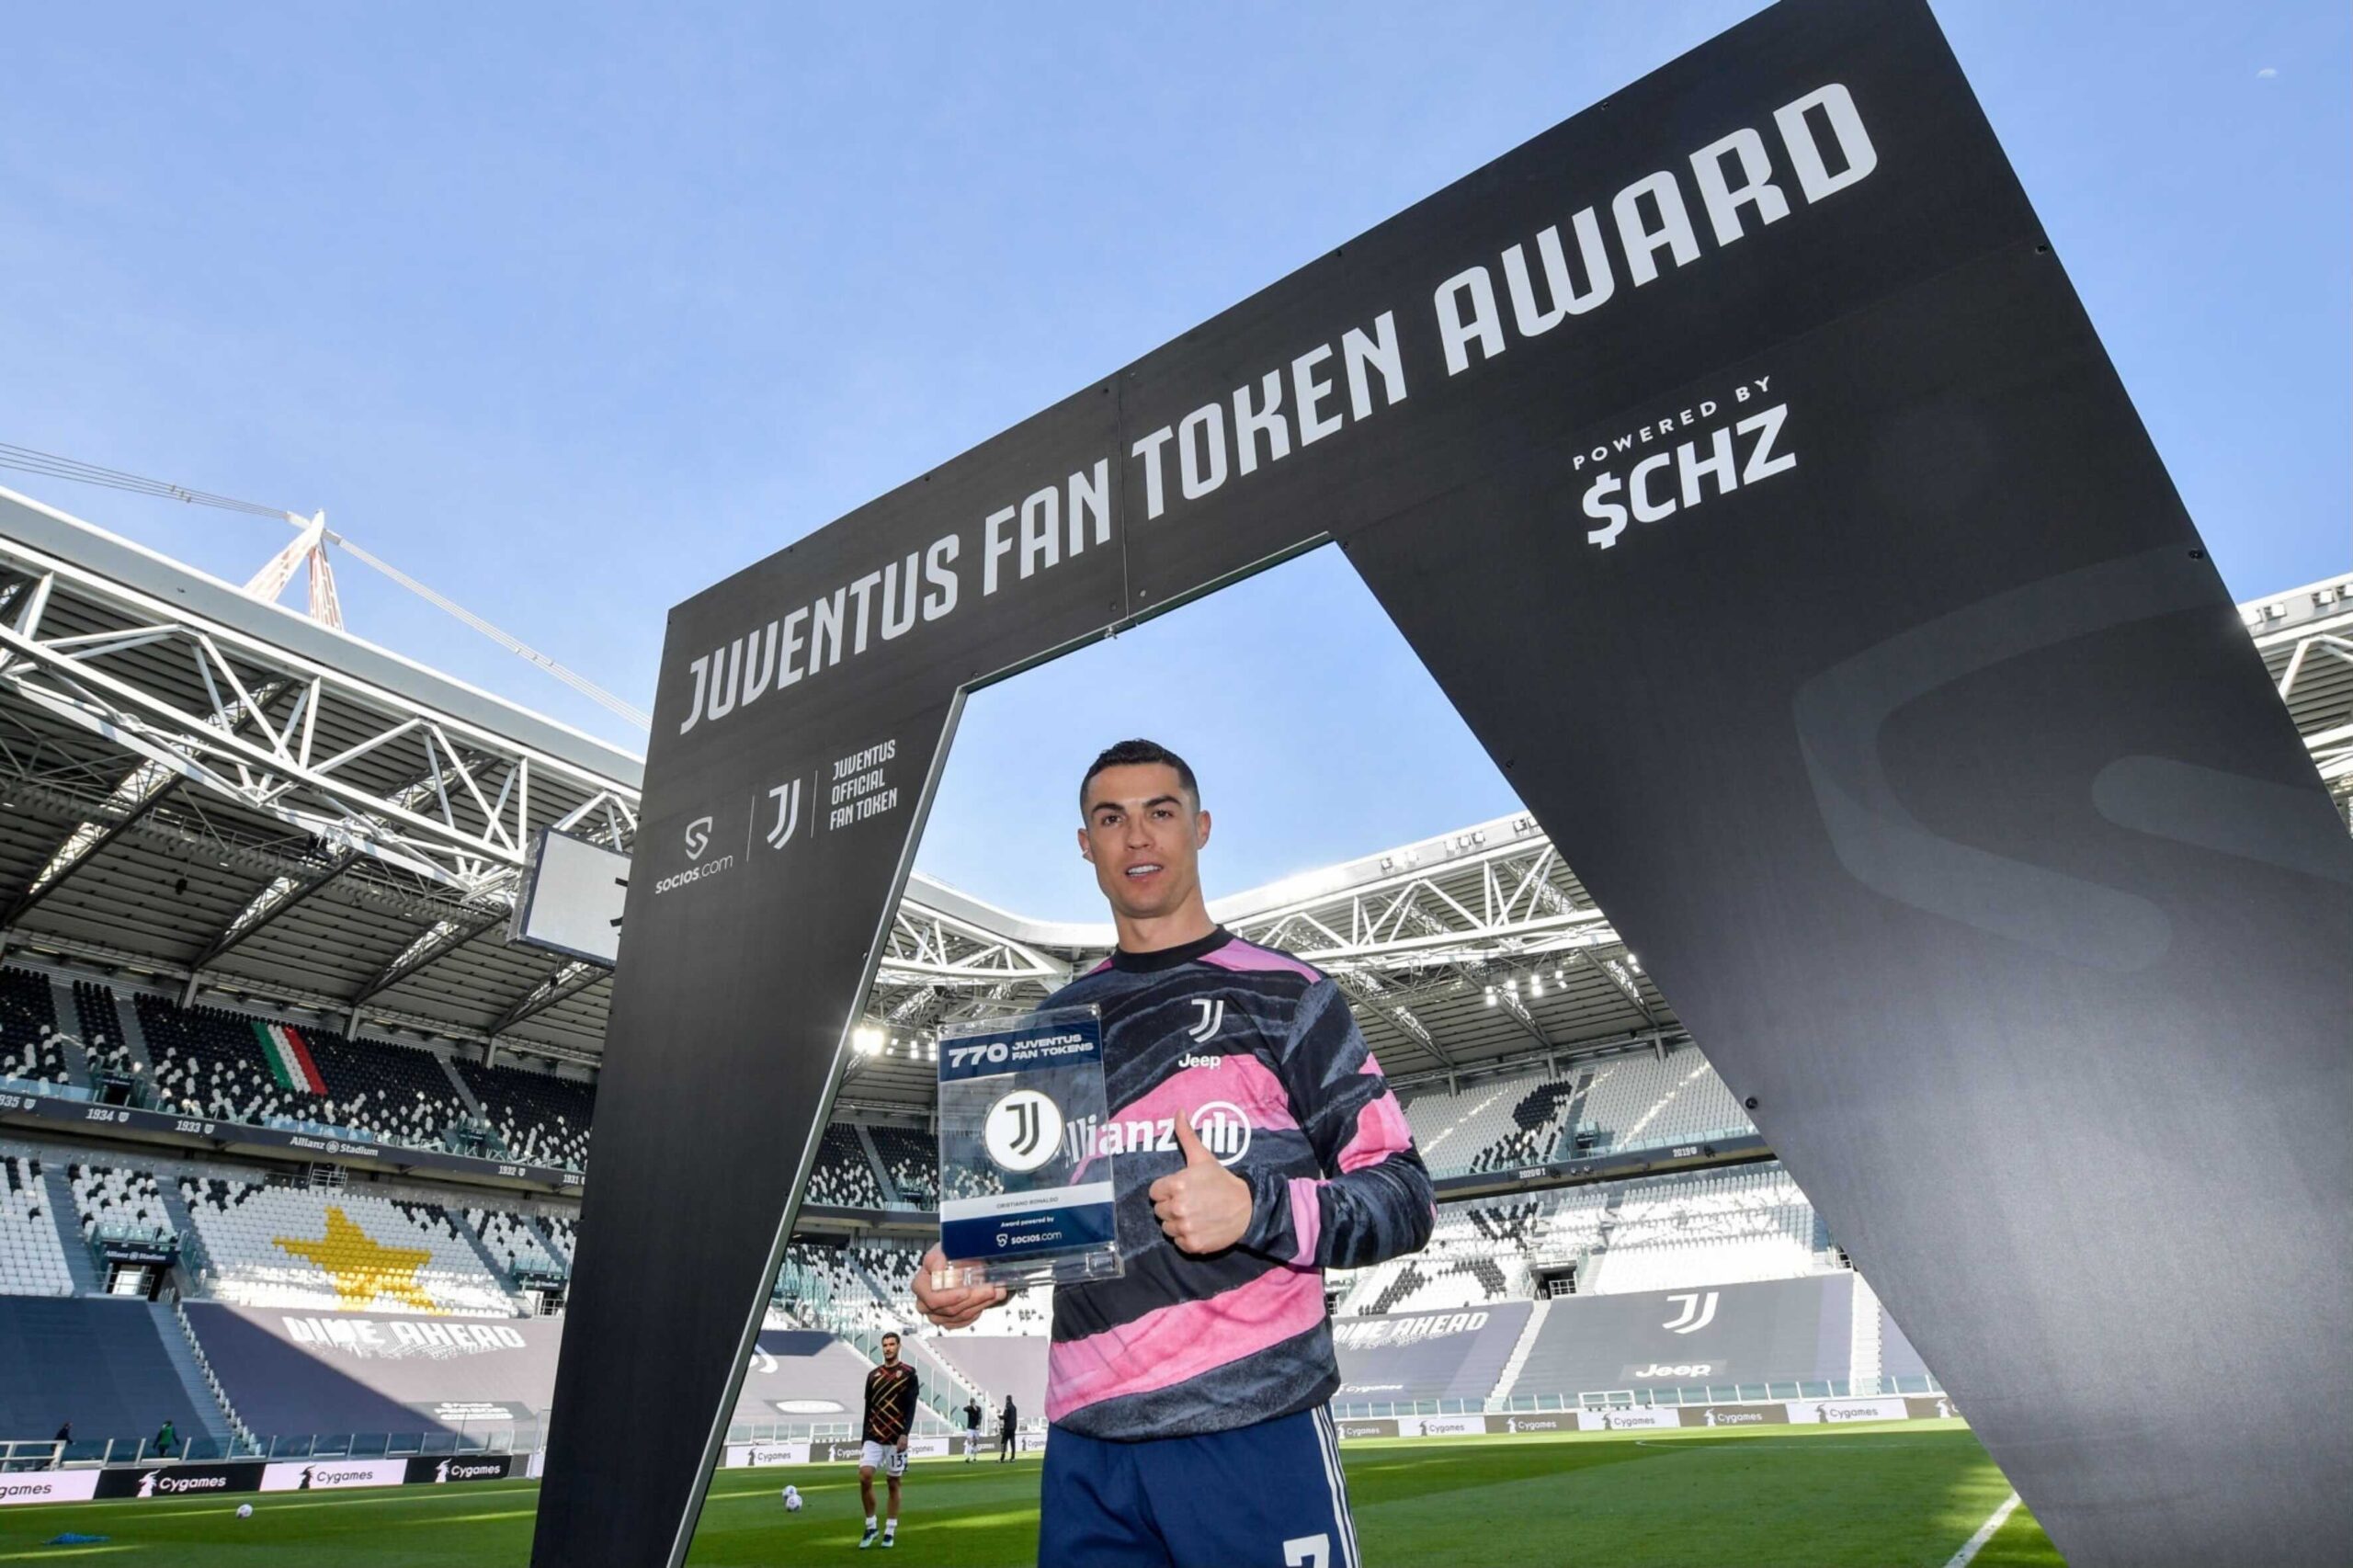 Cristiano Ronaldo 770 JUV token award from Juventus